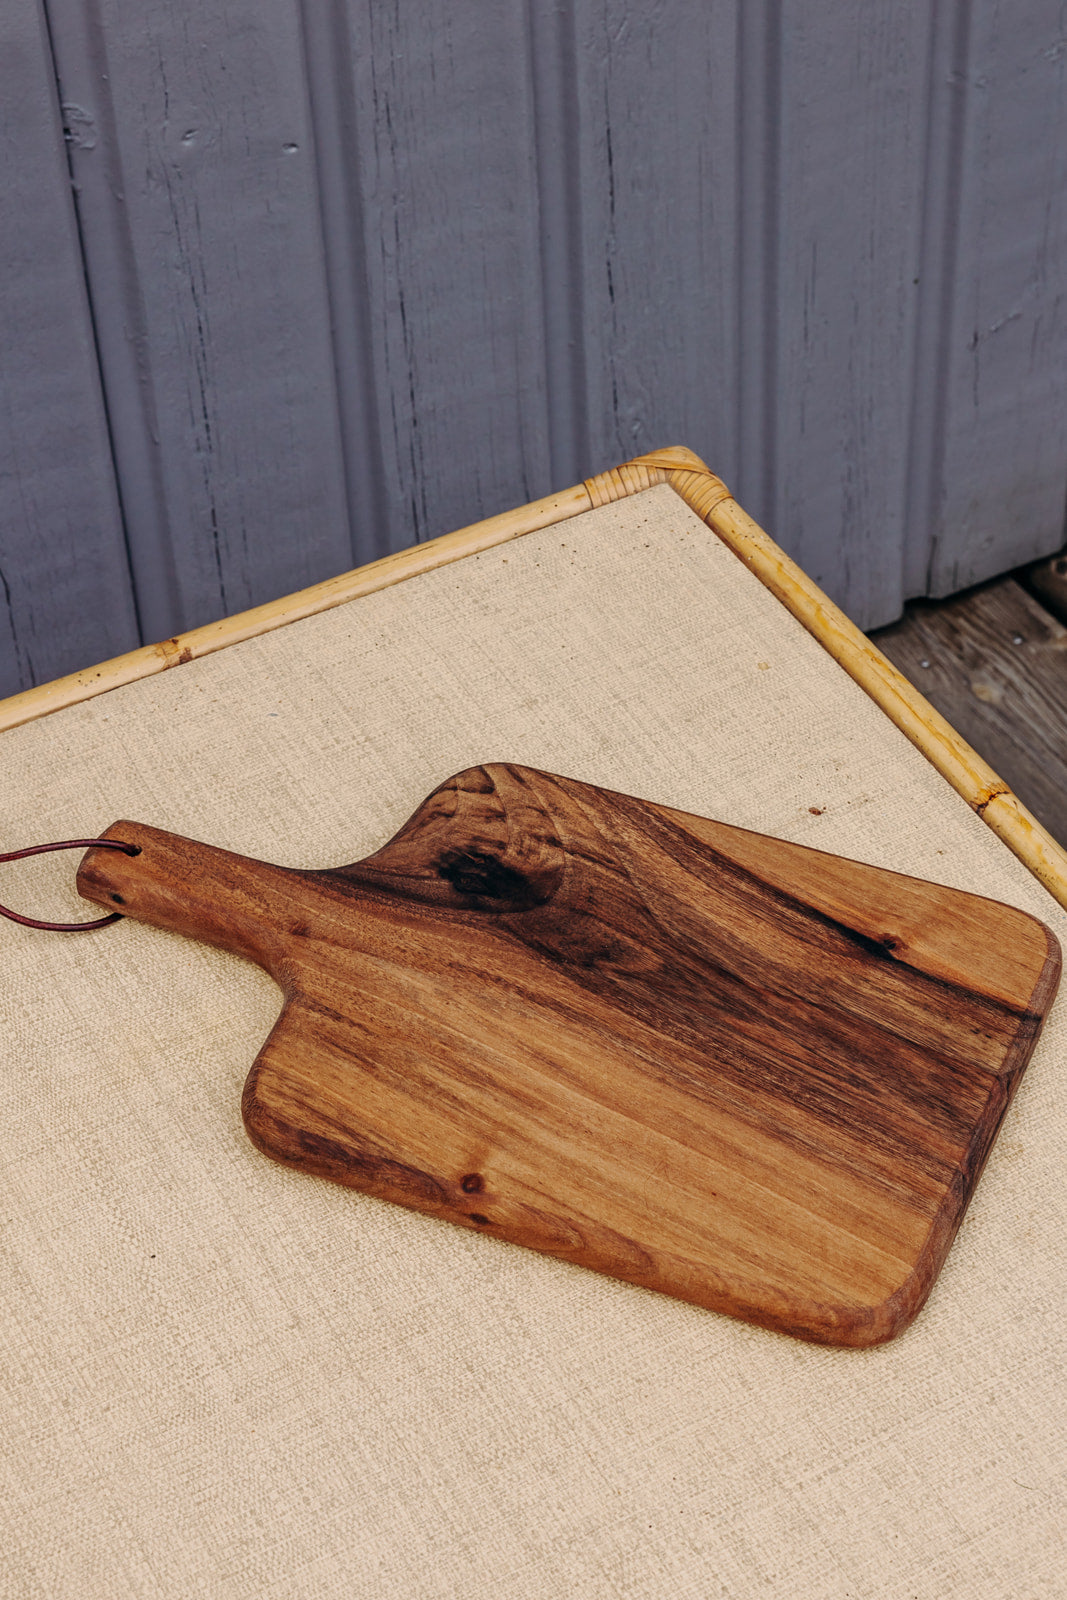 Noa, the walnut cutting board